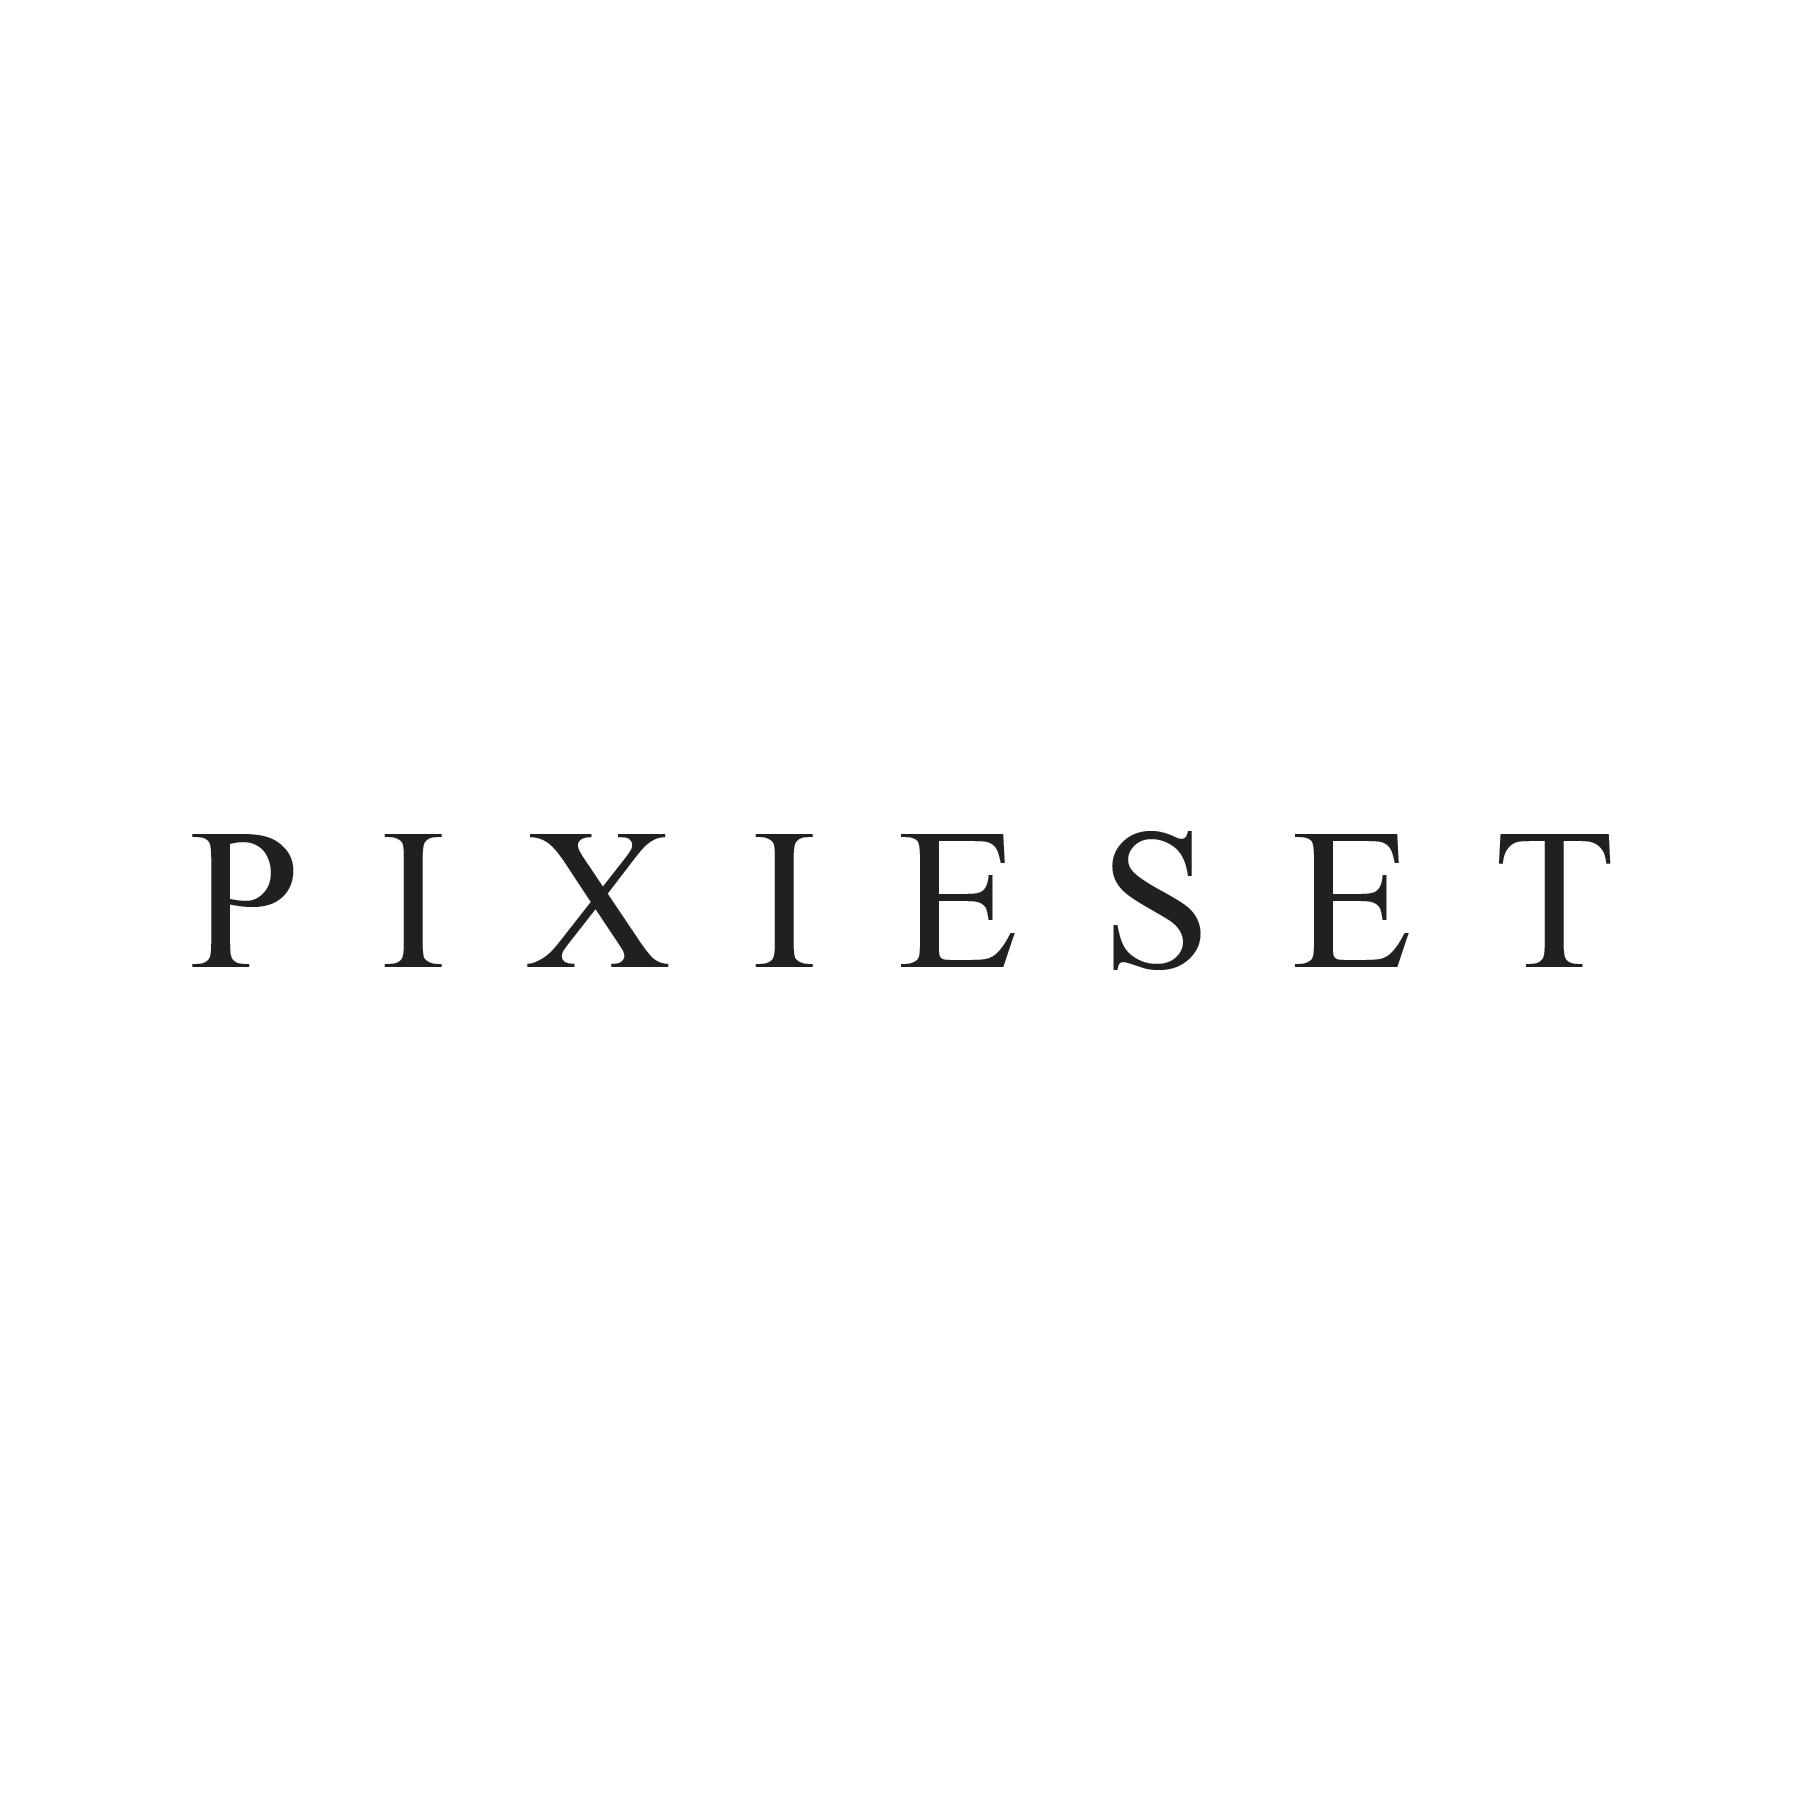 Pixie Company Profile